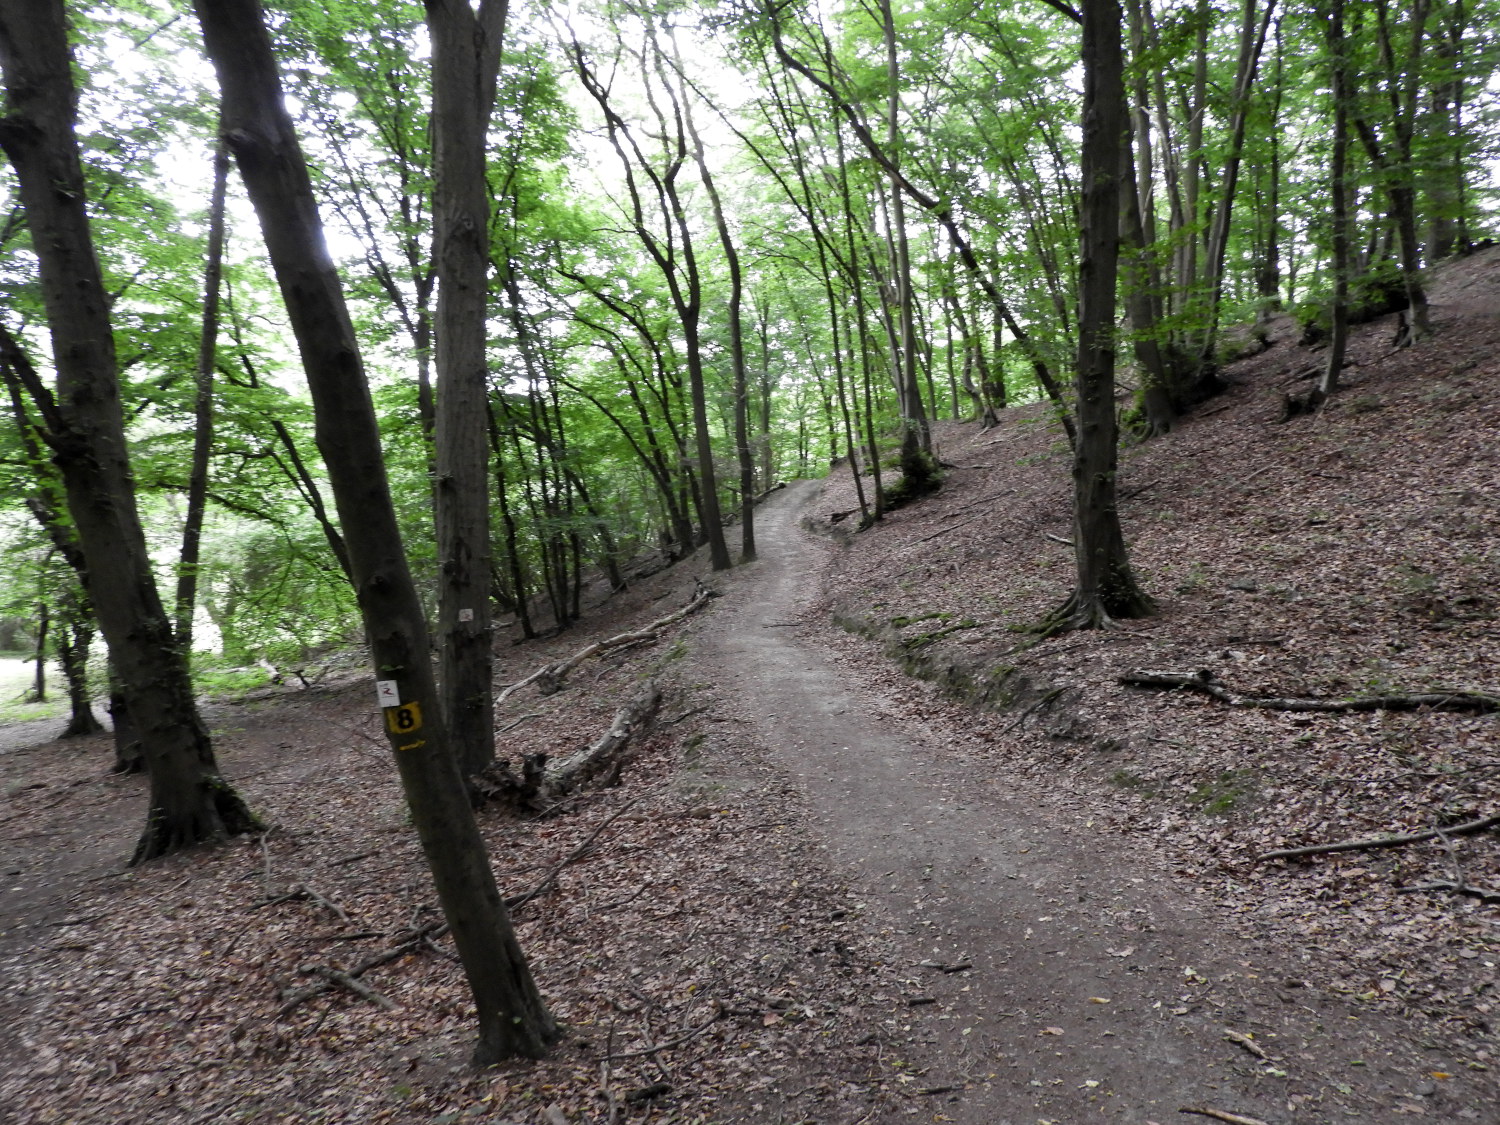 The woodland path from Bad Breisig to Rheineck